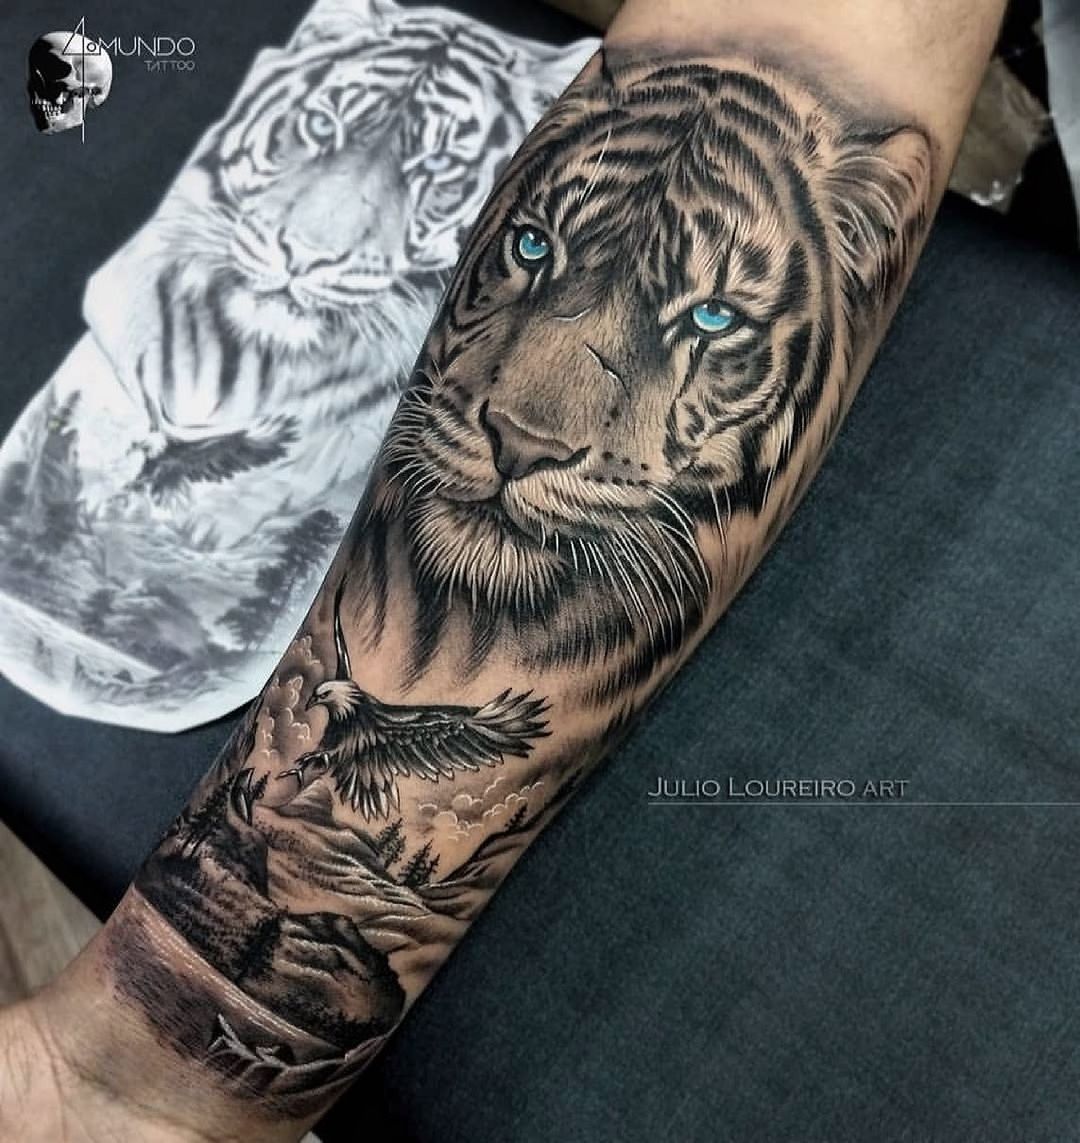 Microrealistic tiger tattoo on the forearm